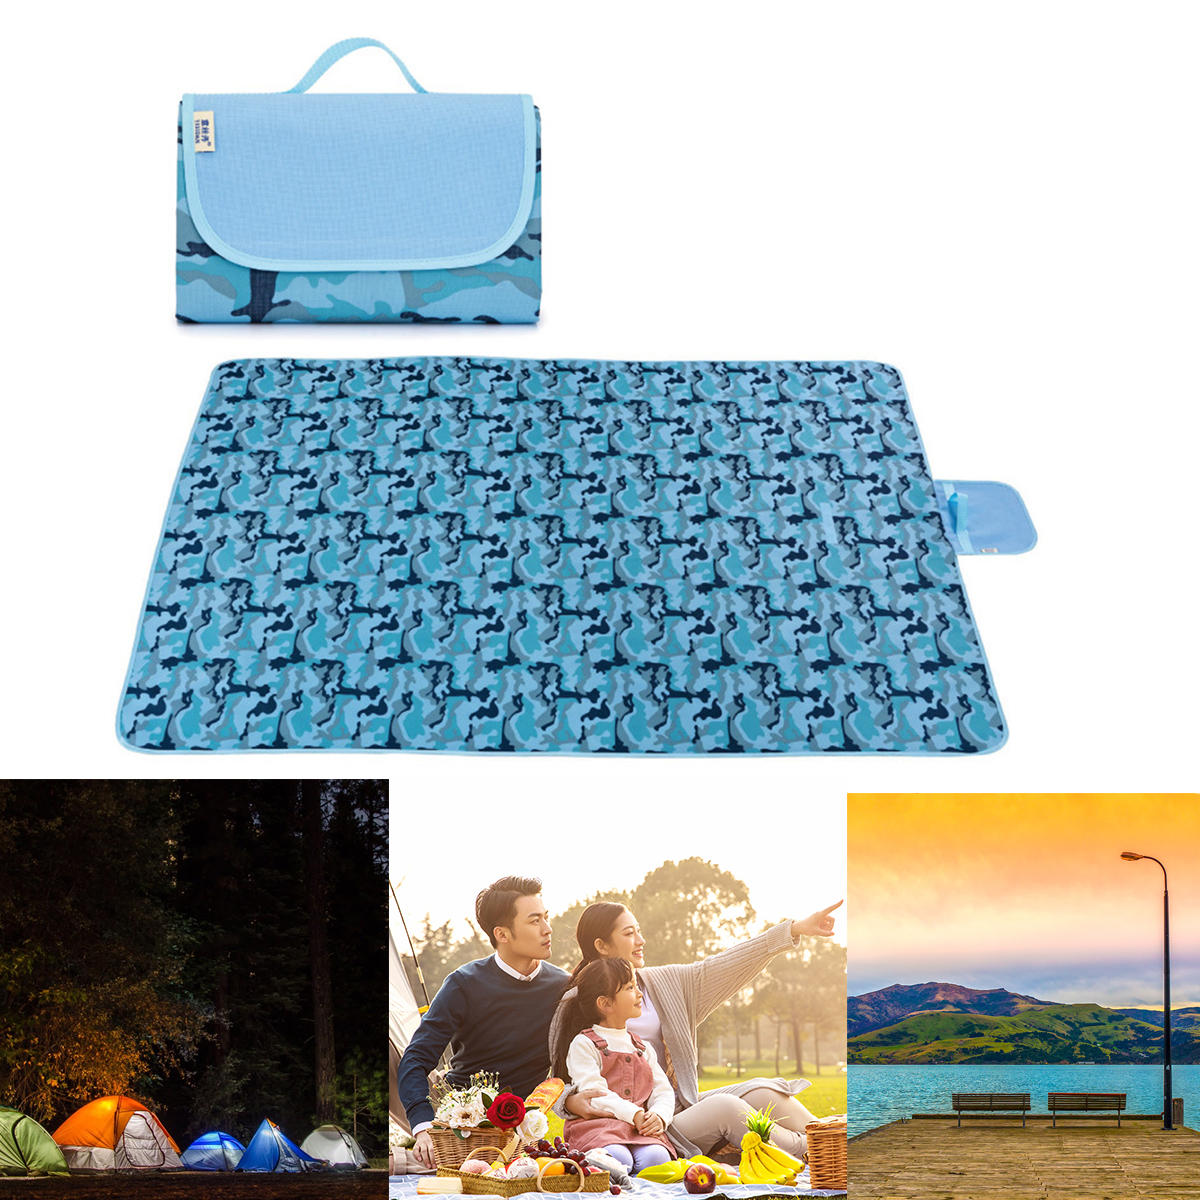 Tapete de picnic plegable de 145/195x200cm, impermeable, resistente a la humedad, para playa, camping y viajes.